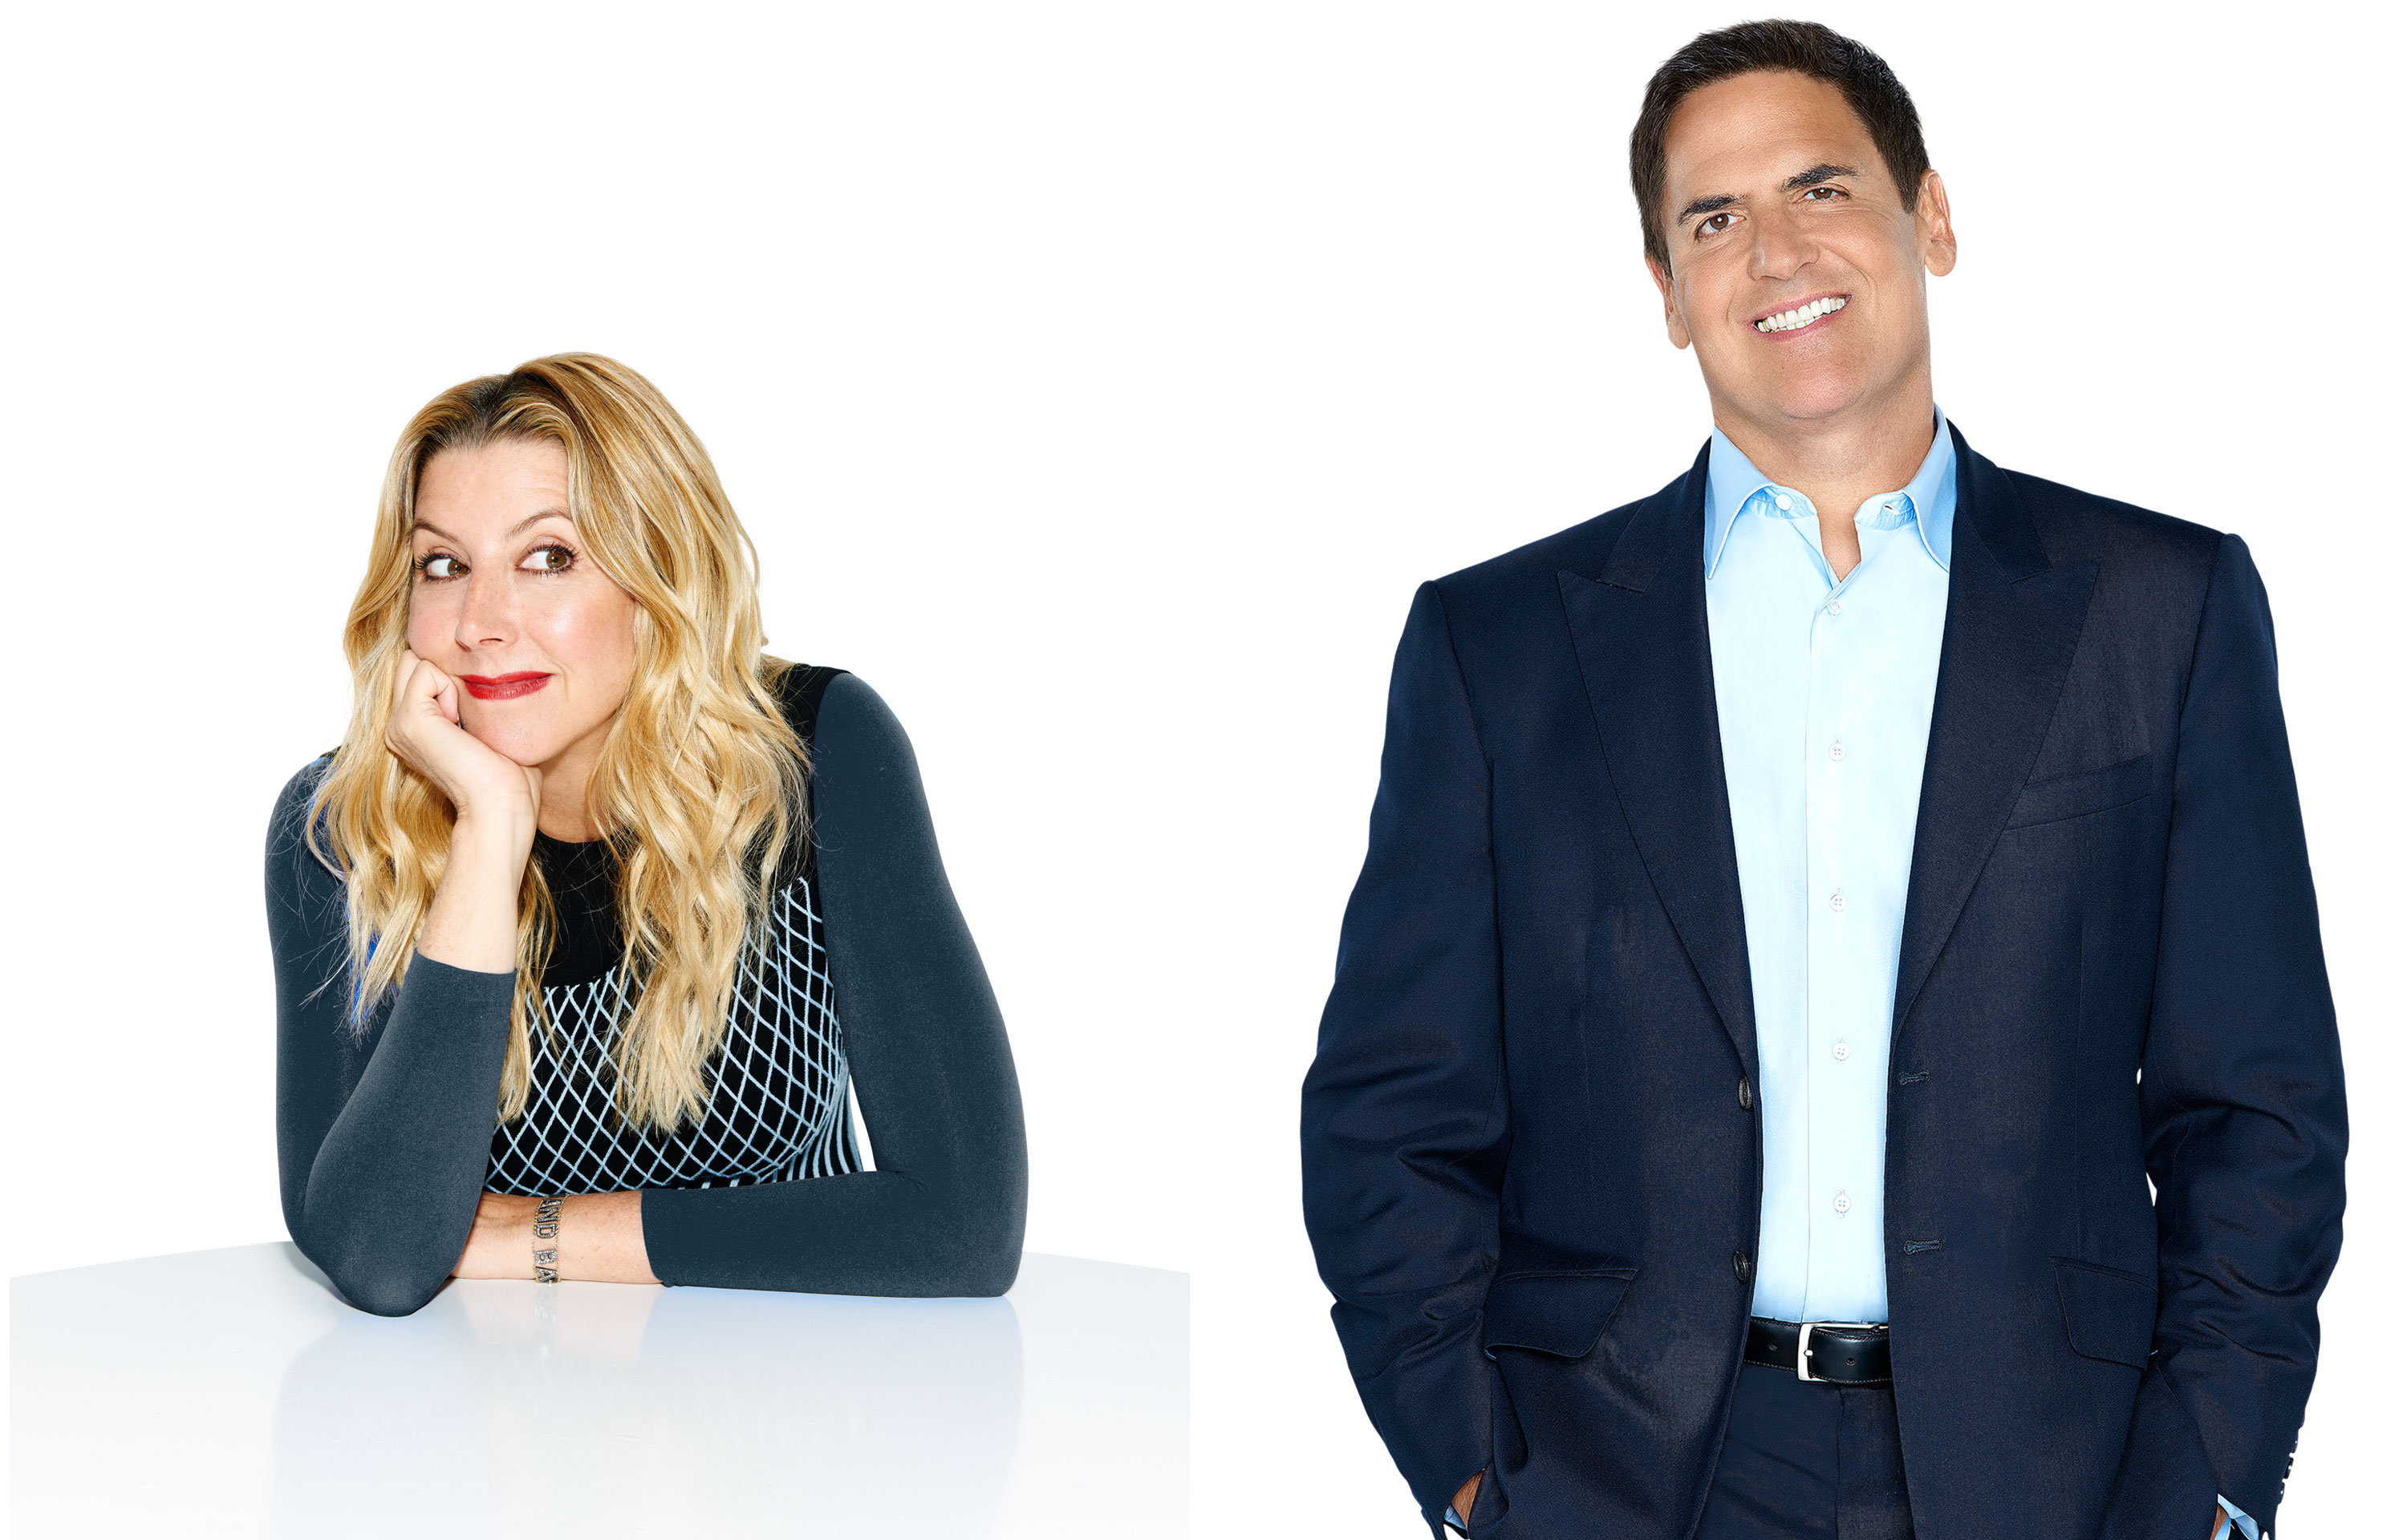 Sara Blakely and Mark Cuban, two billionaires on ABC’s reality TV show Shark Tank.